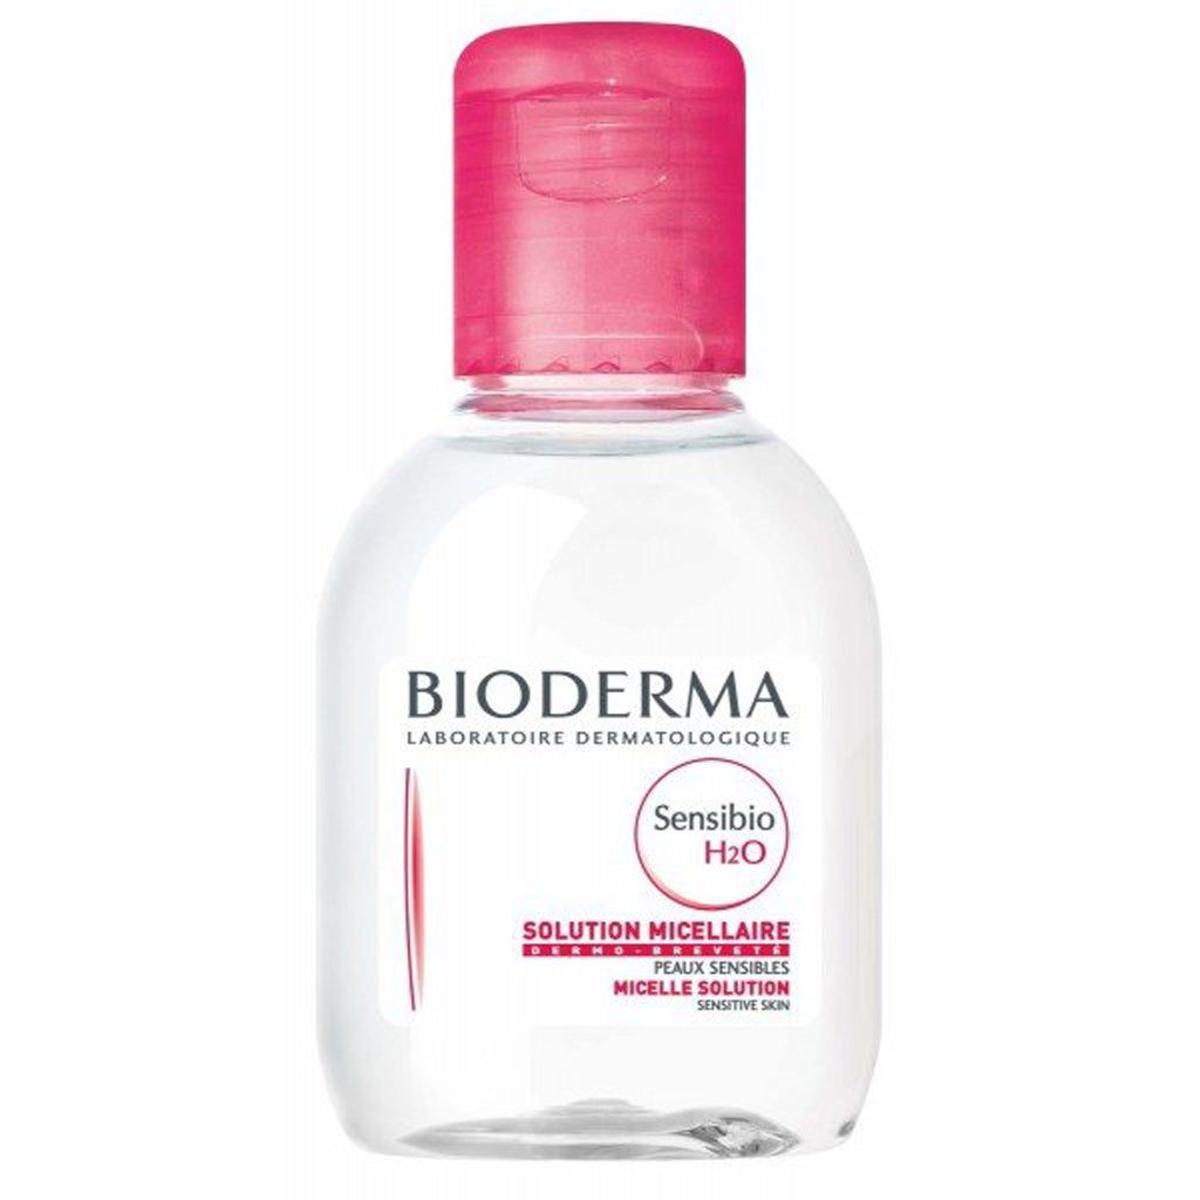 Agua micelar de Bioderma